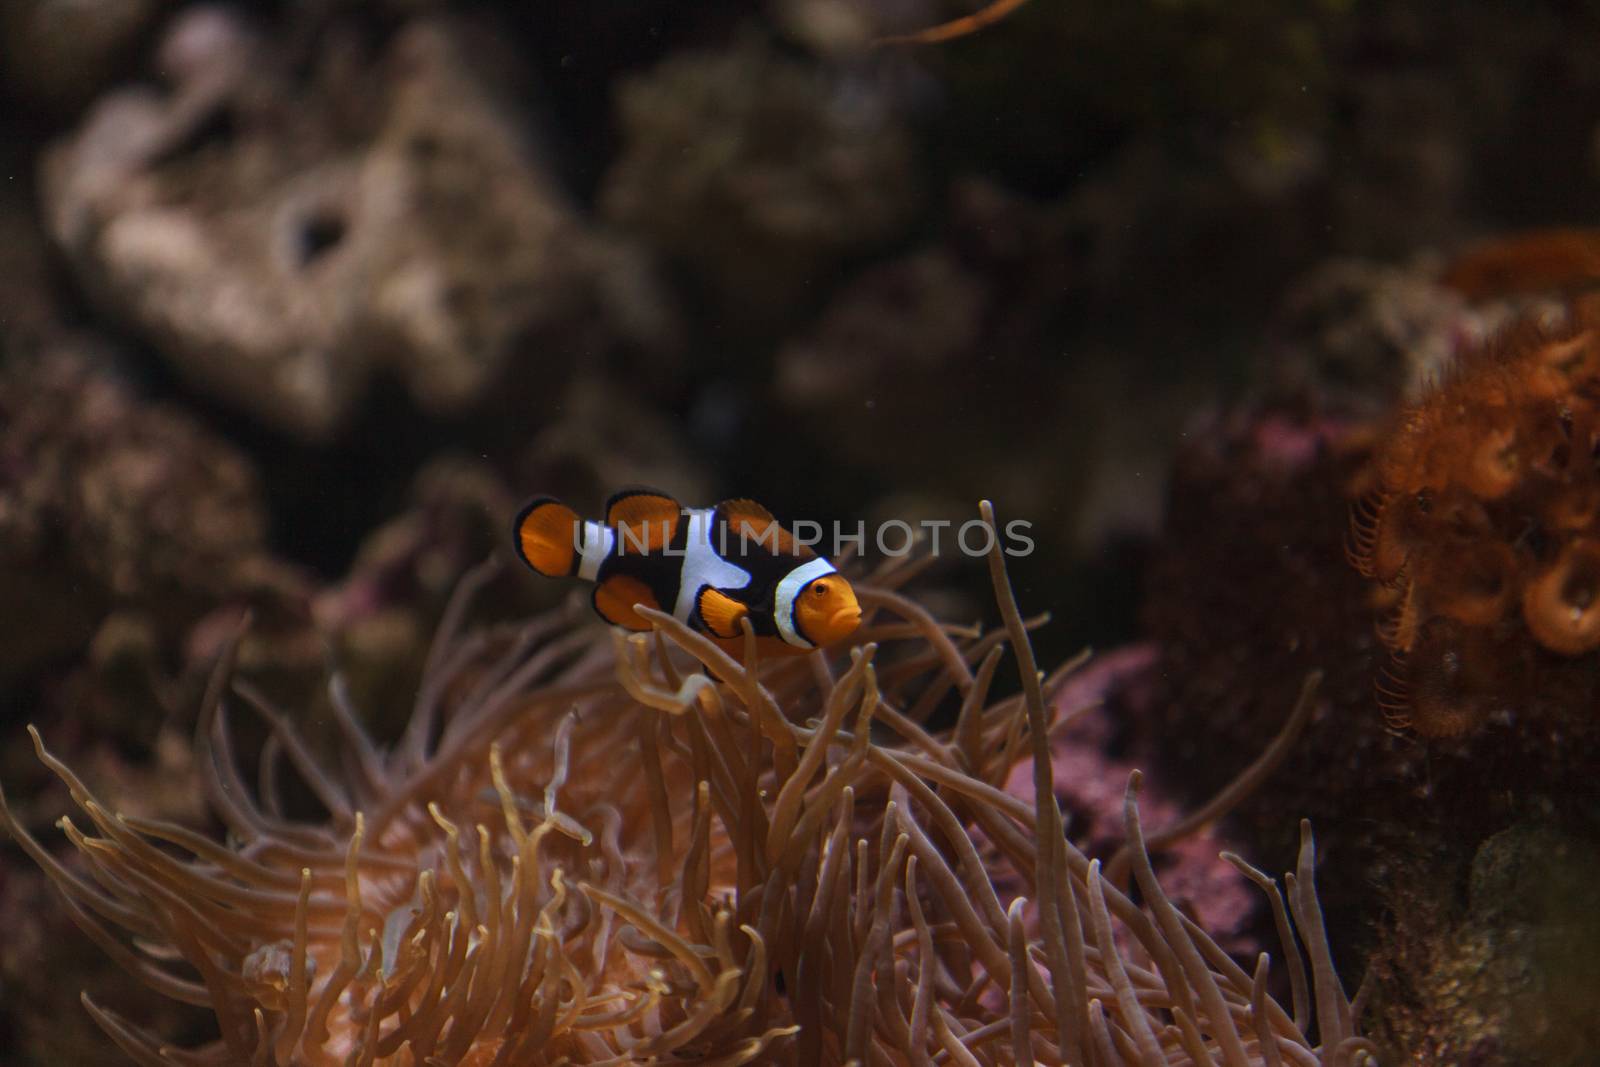 Clownfish by steffstarr